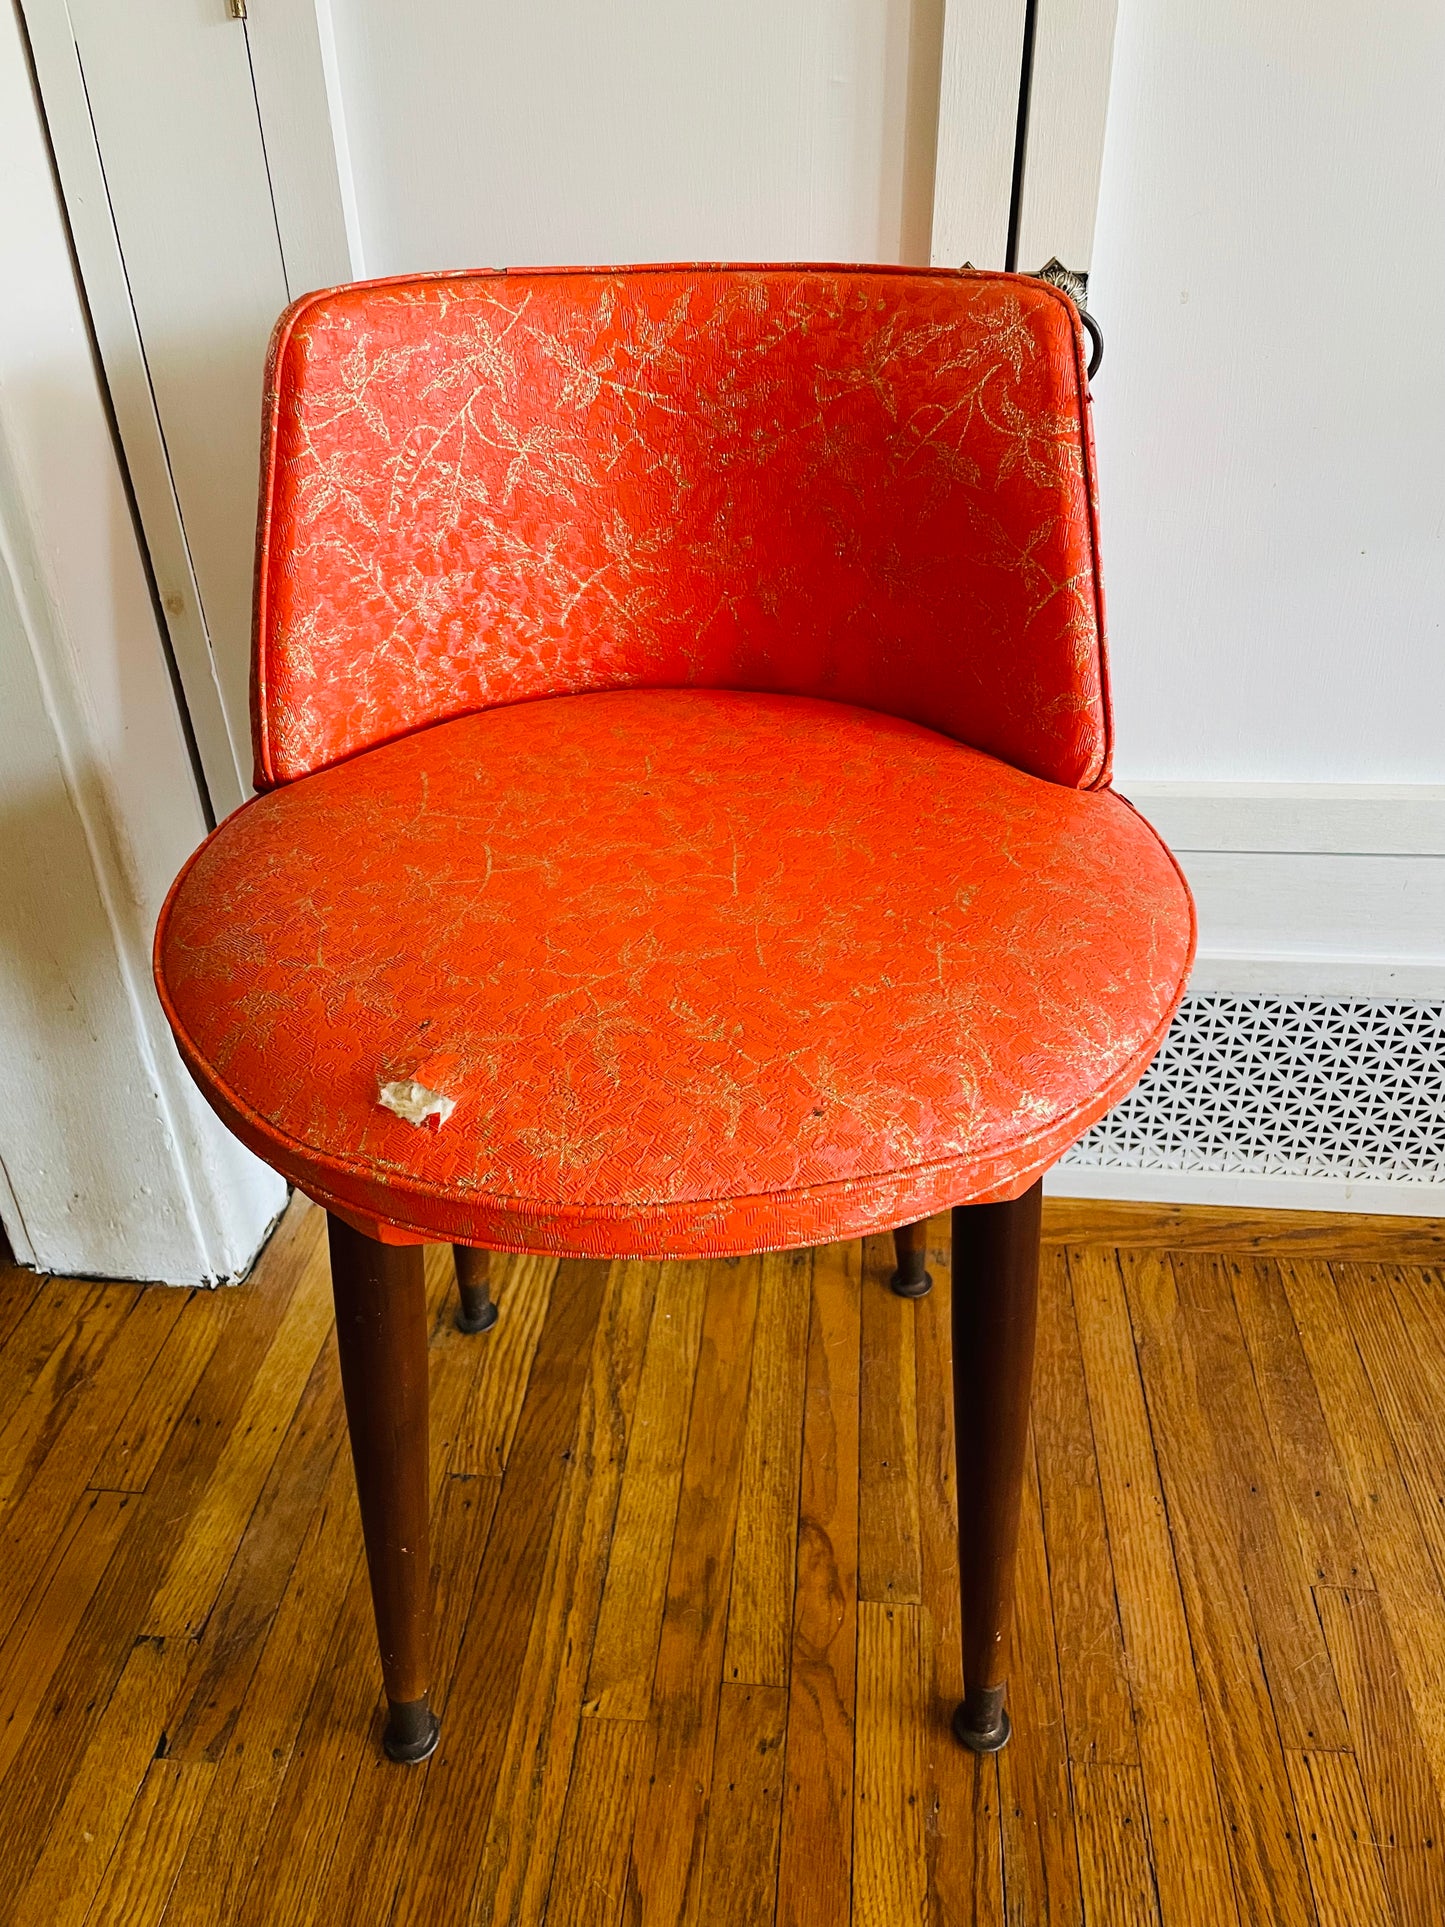 Mid-Century Modern Short Stool Chair with Orange Fabric & Gold Print - Swivels 360 Degrees!